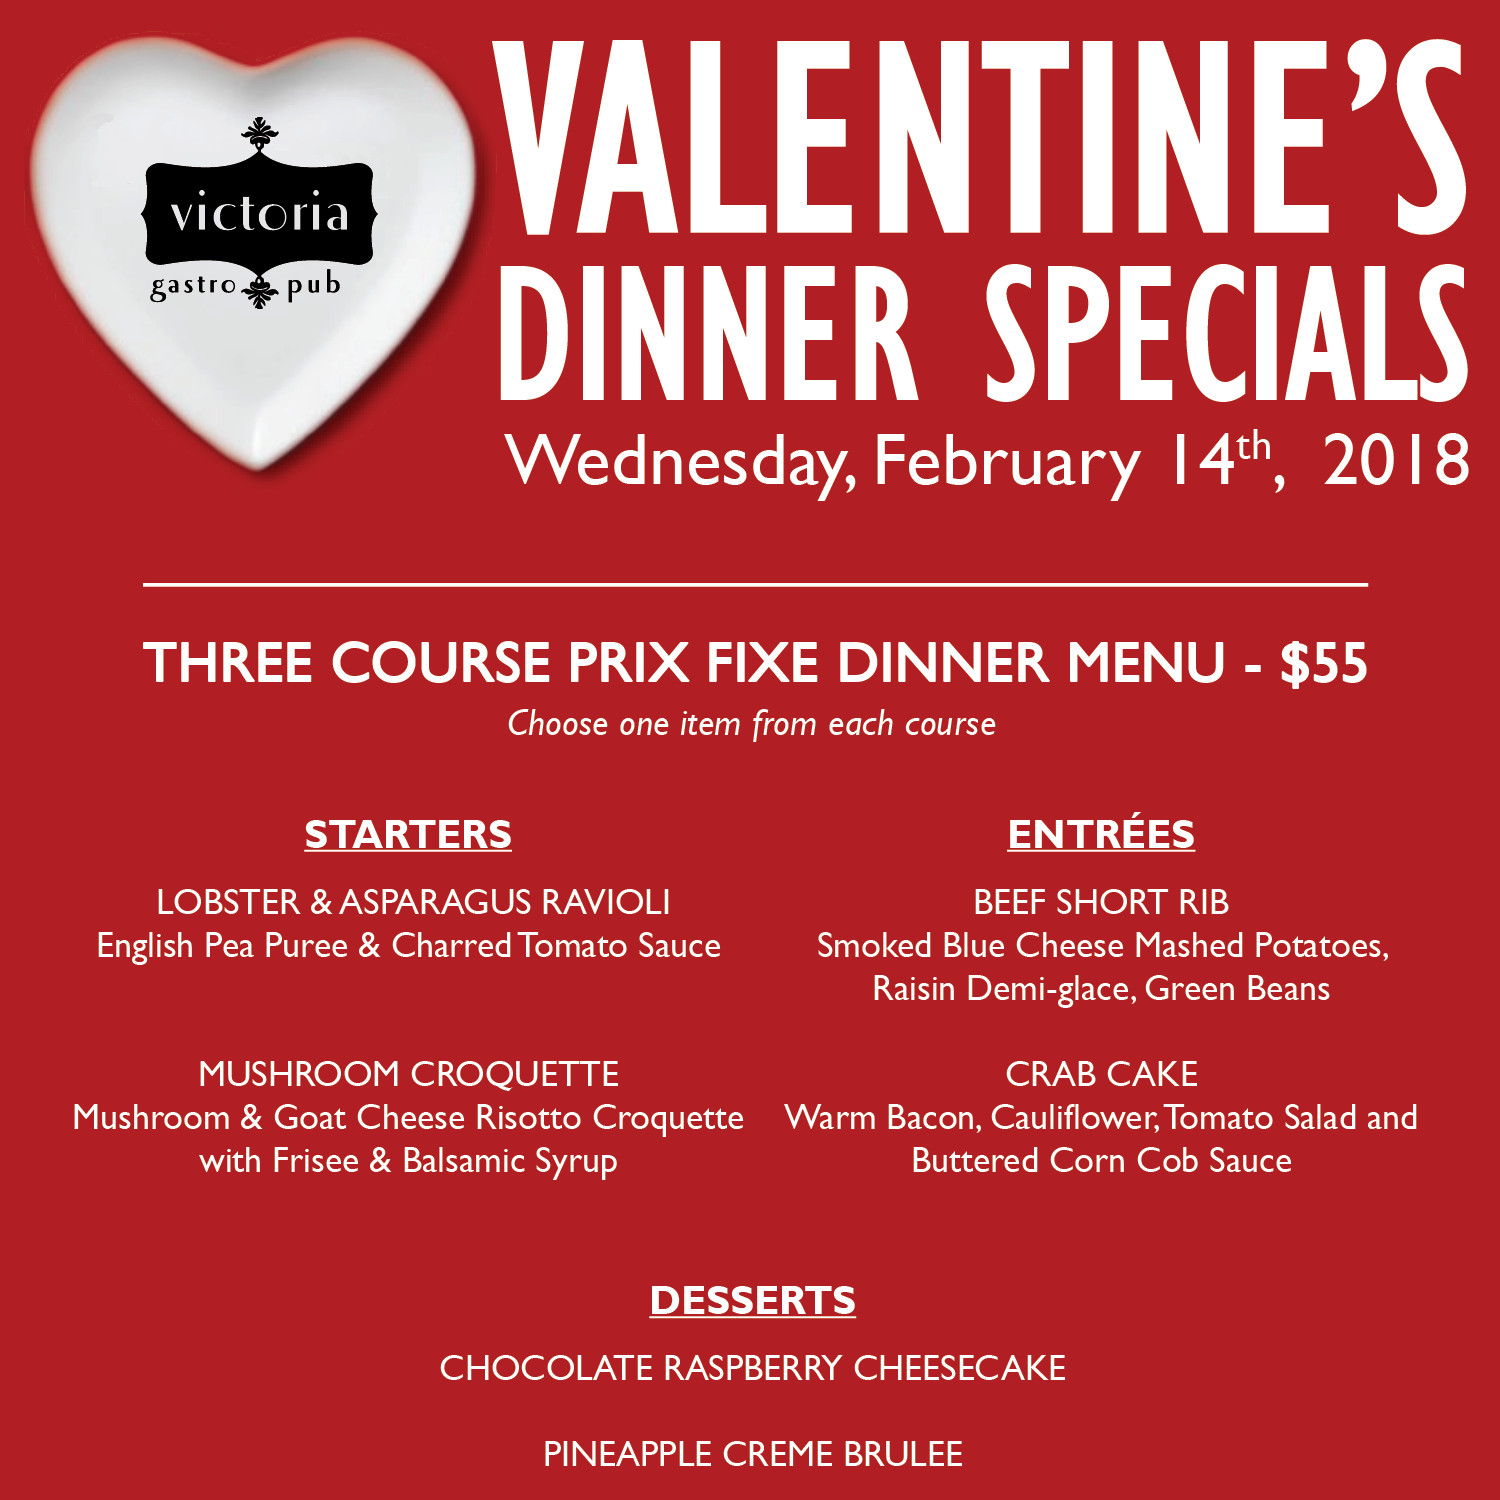 Valentines Dinner Special
 Valentine s Dinner Specials Victoria Gastro Pub